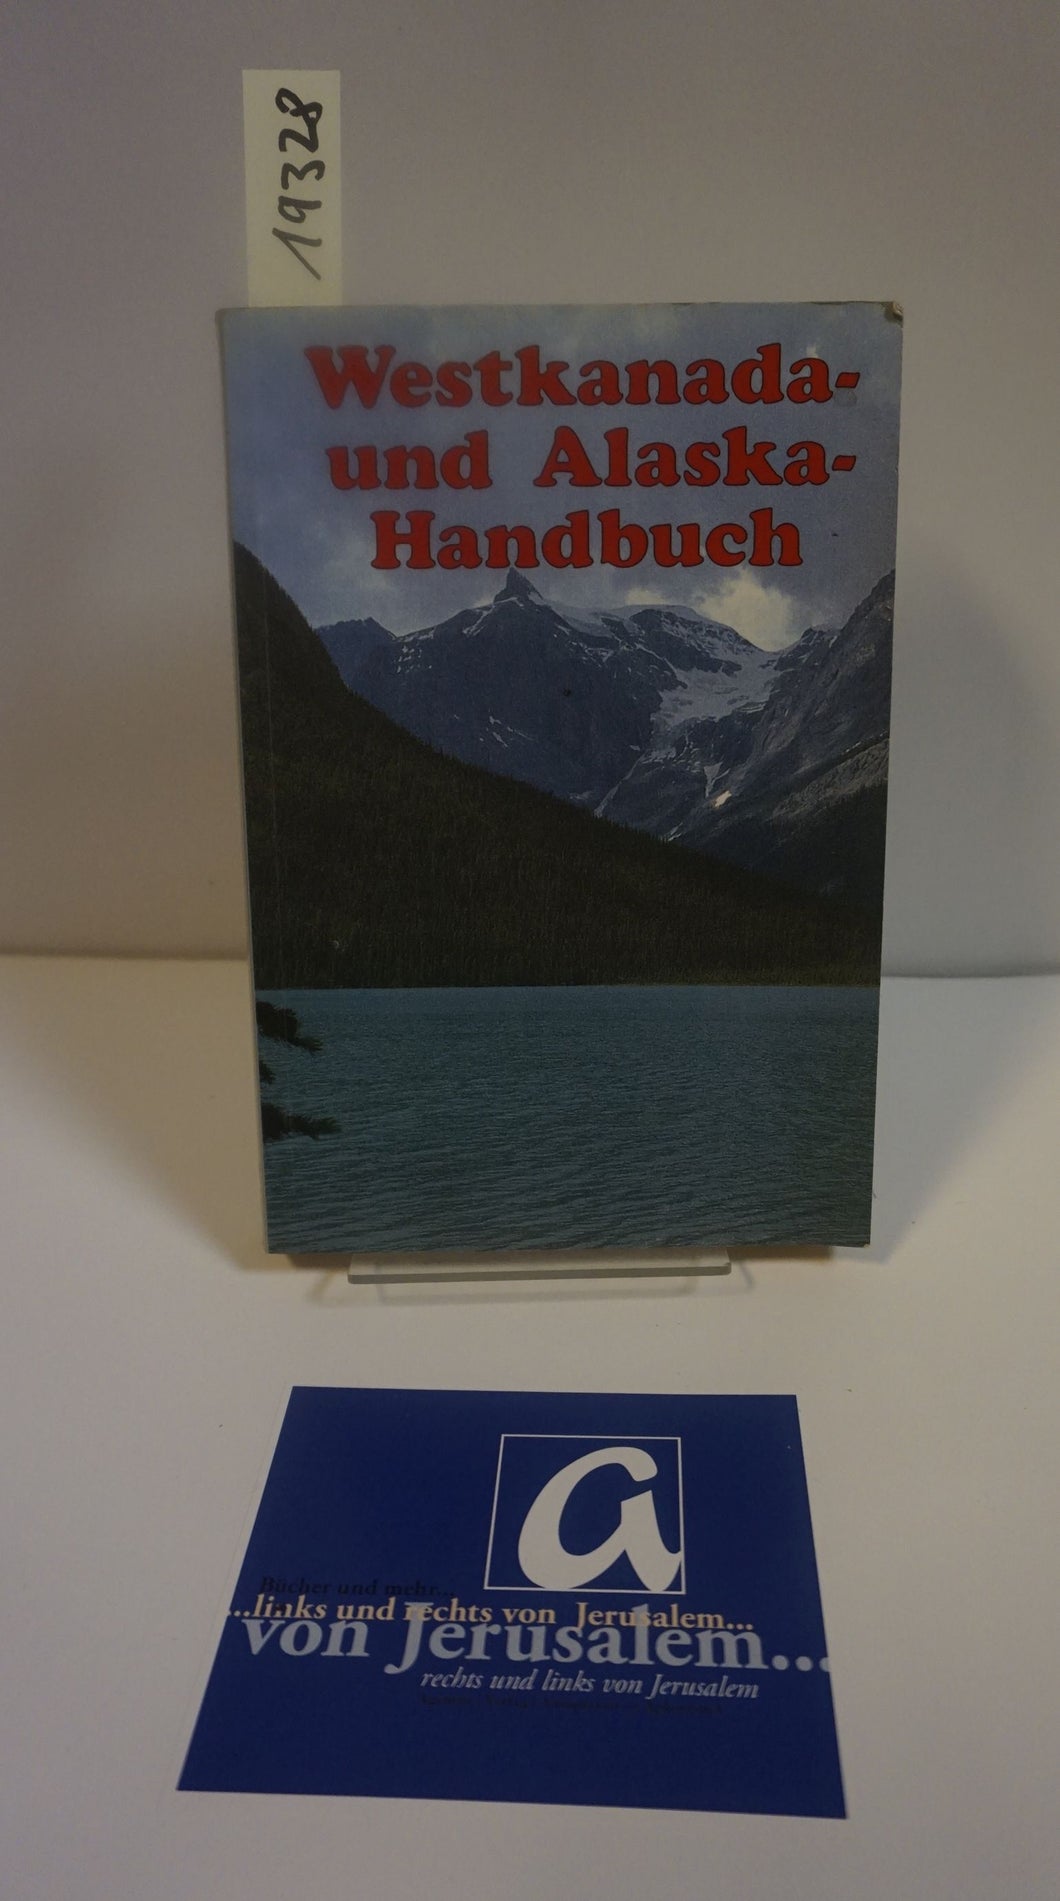 Westkanada- und Alaska-Handbuch